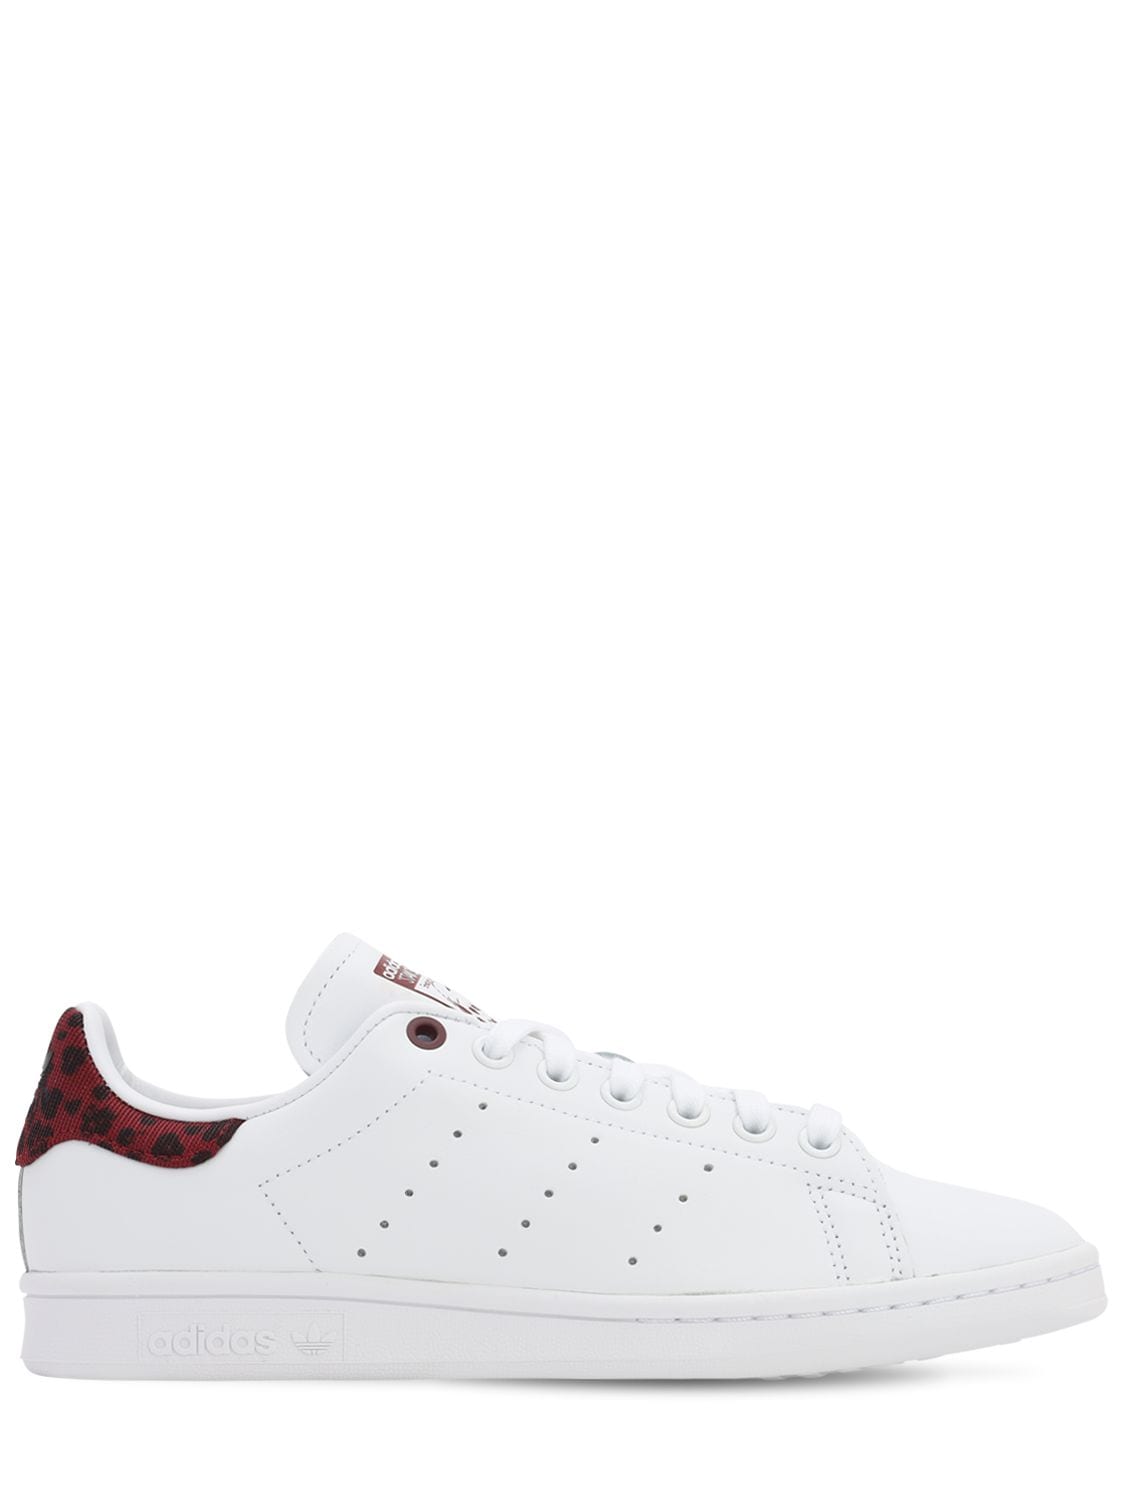 Adidas Originals Stan Smith Sneakers In White,bordeaux